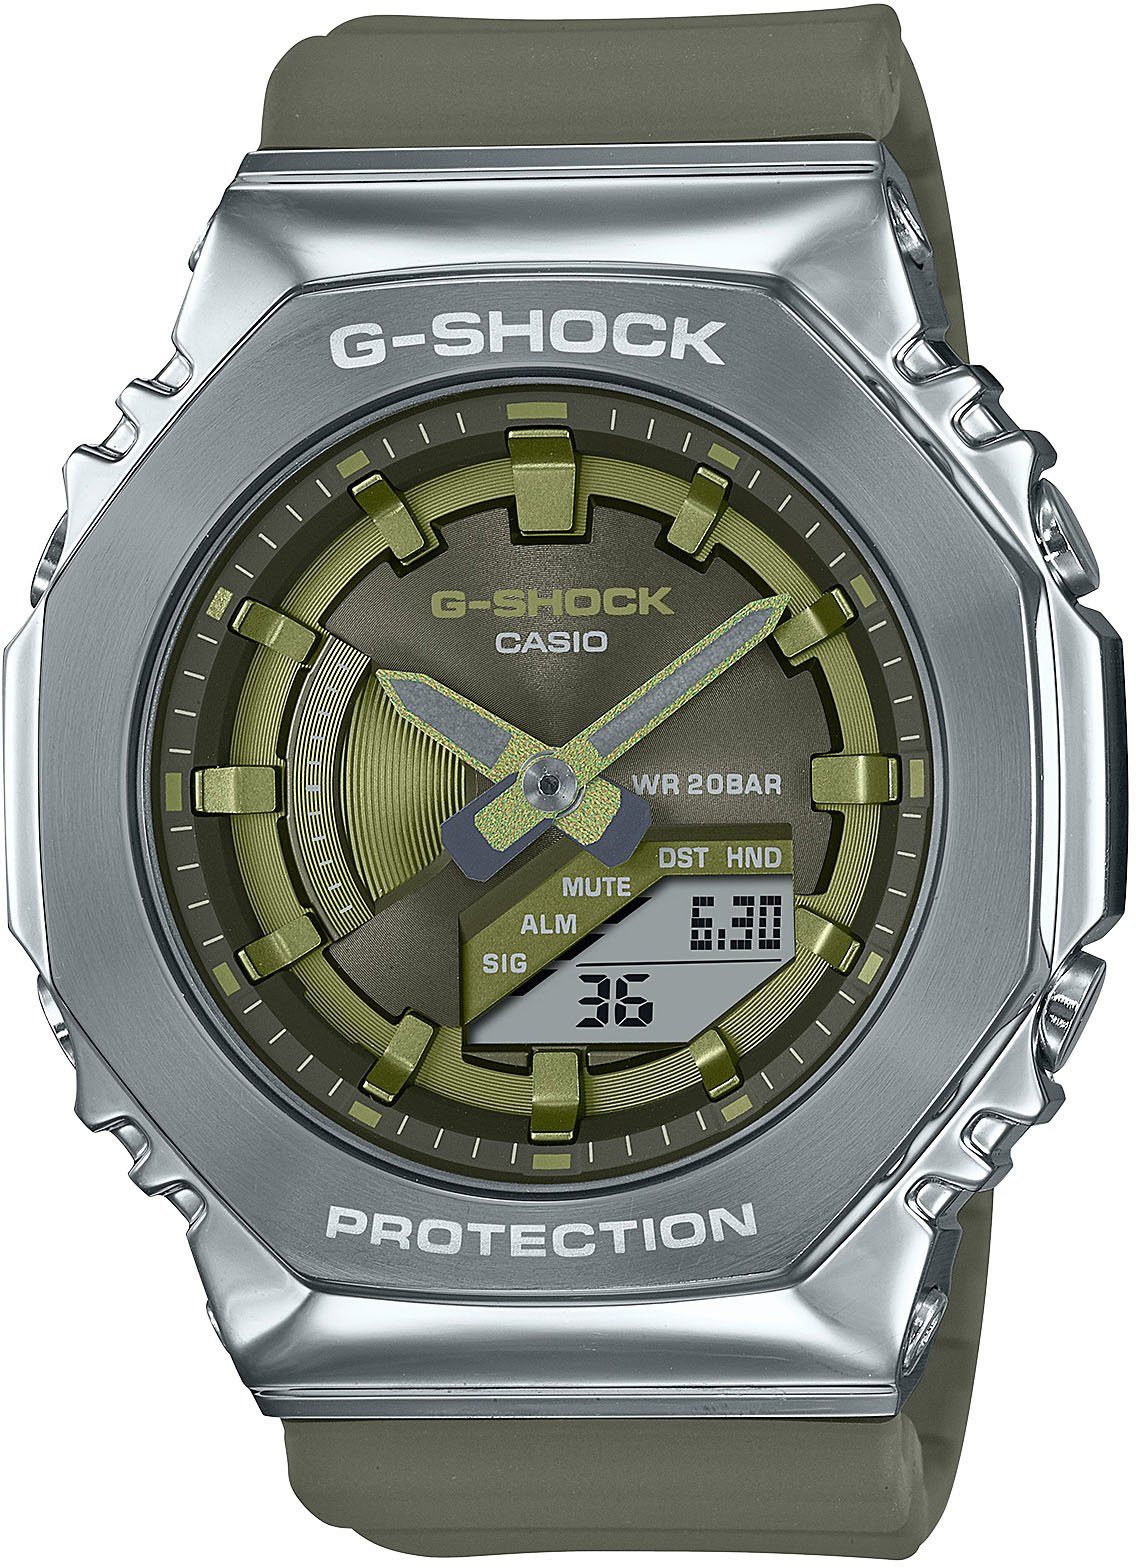 GM-S2100-3AER Chronograph CASIO G-SHOCK